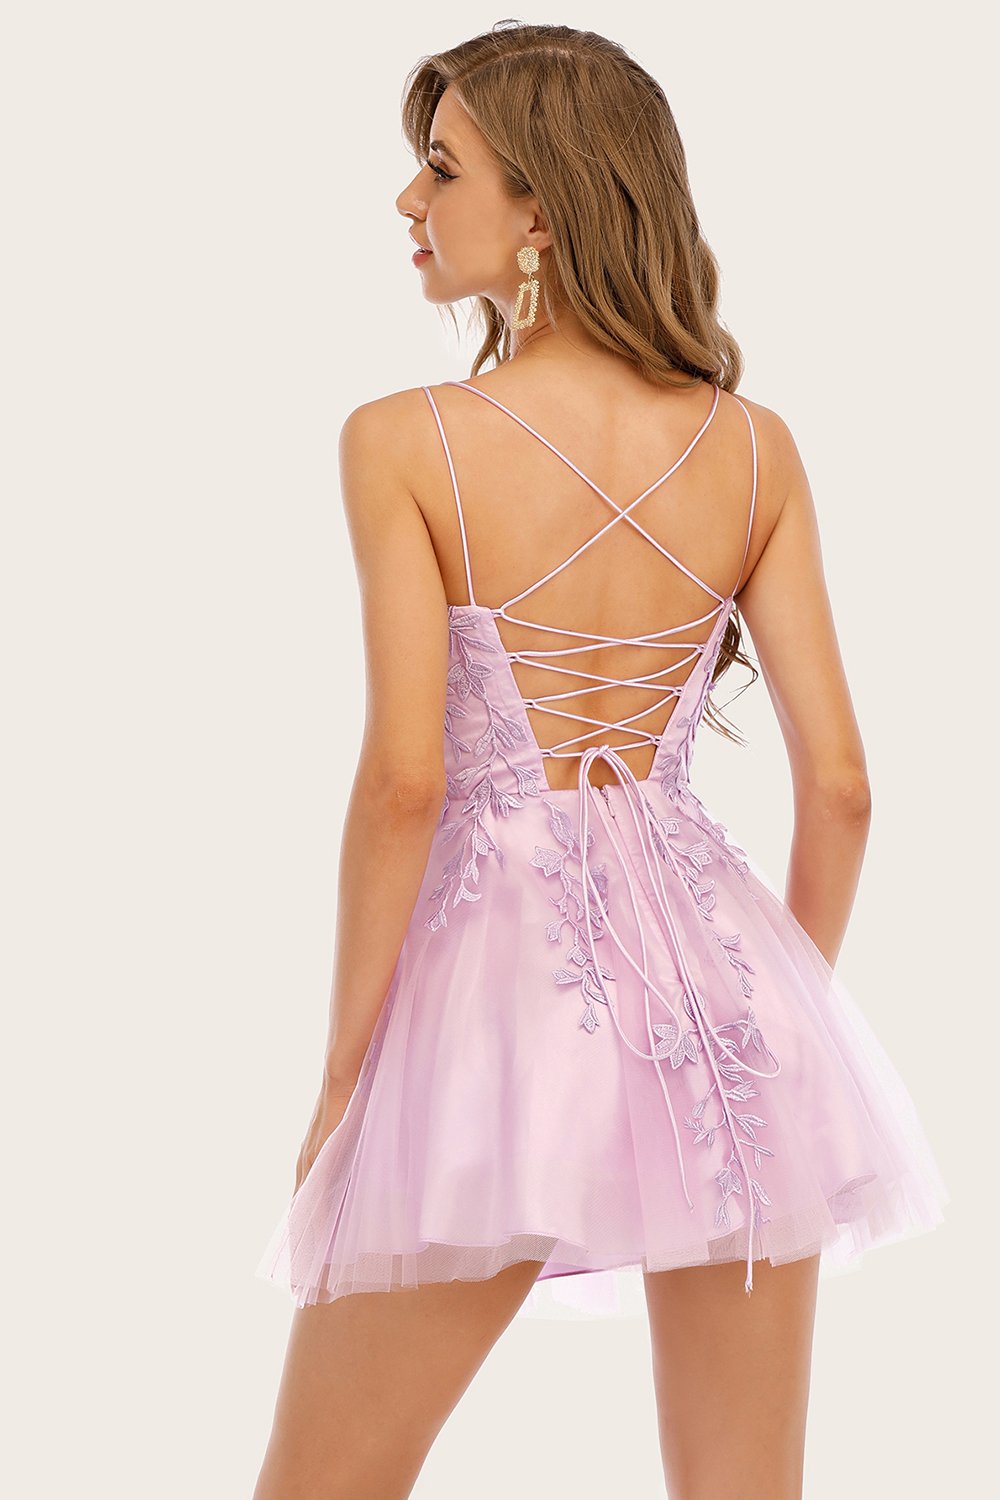 Pink Spaghetti Straps Short Party Dress